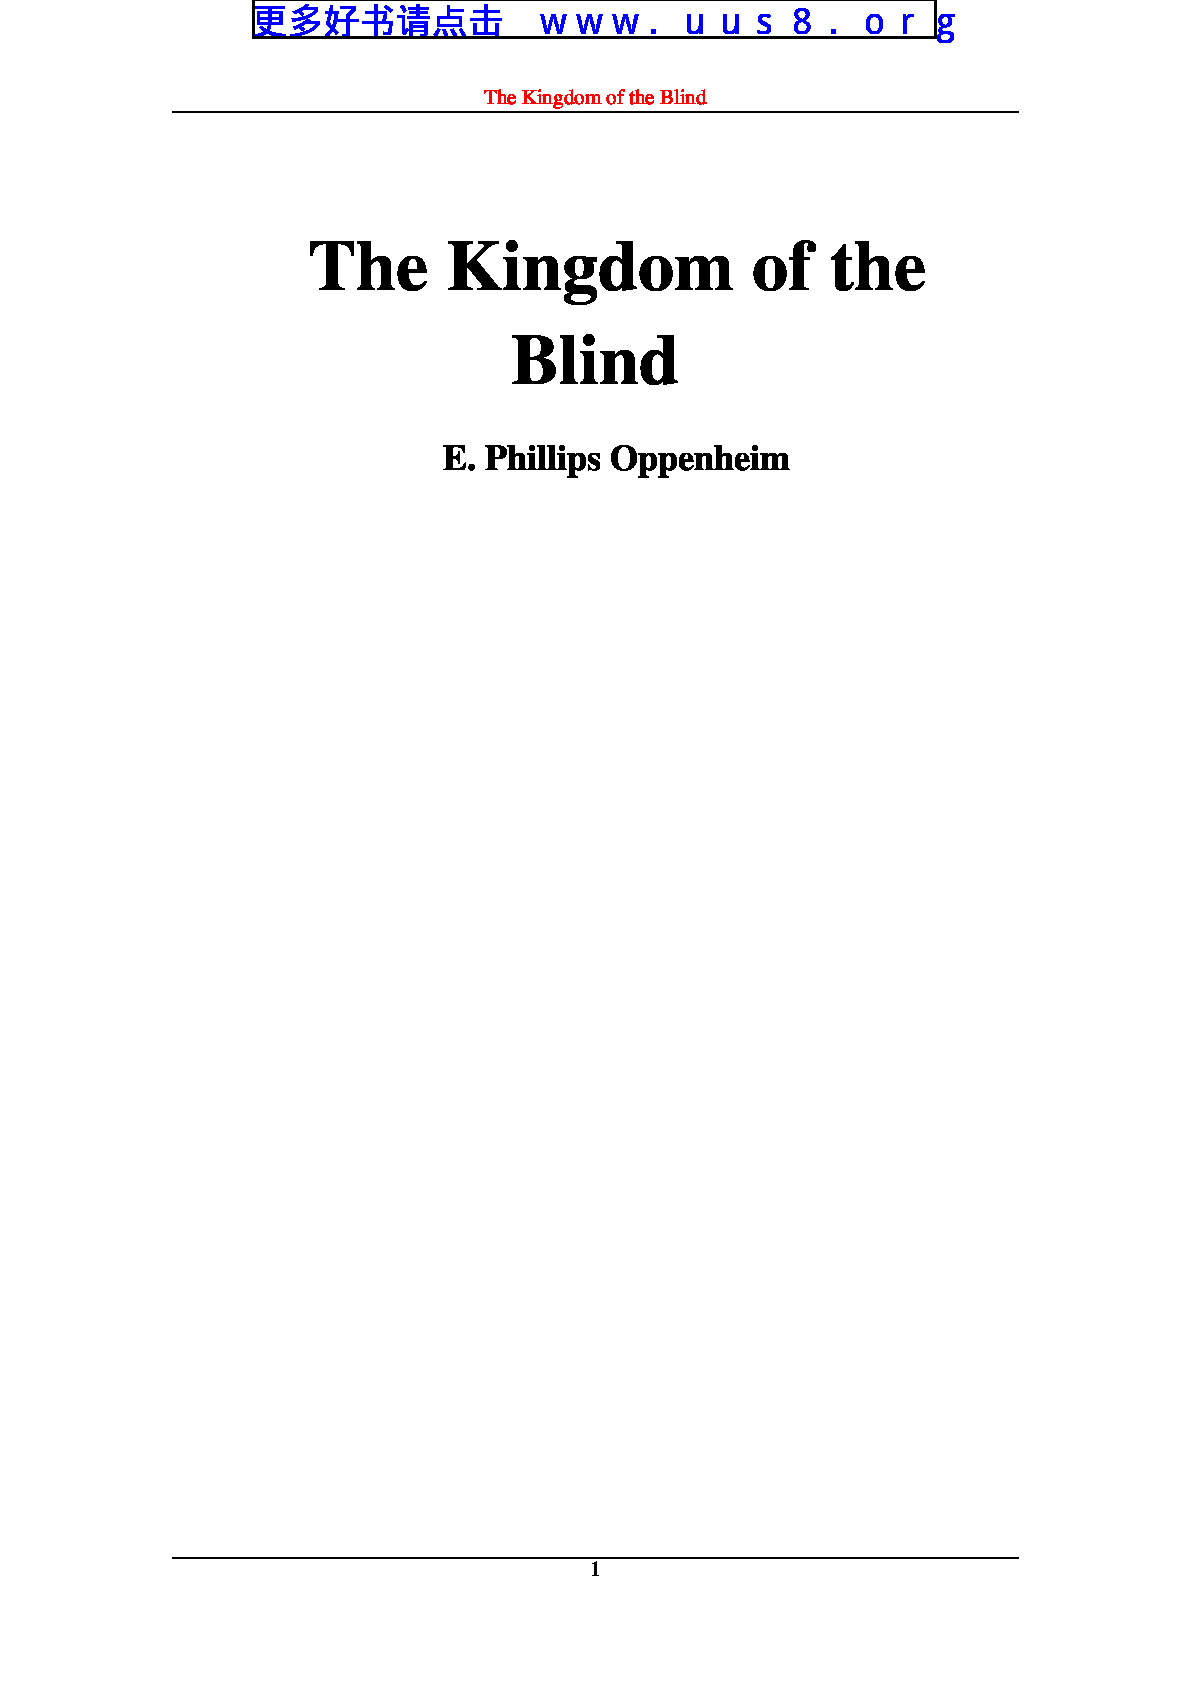 Kingdom_of_the_Blind(盲人王国)